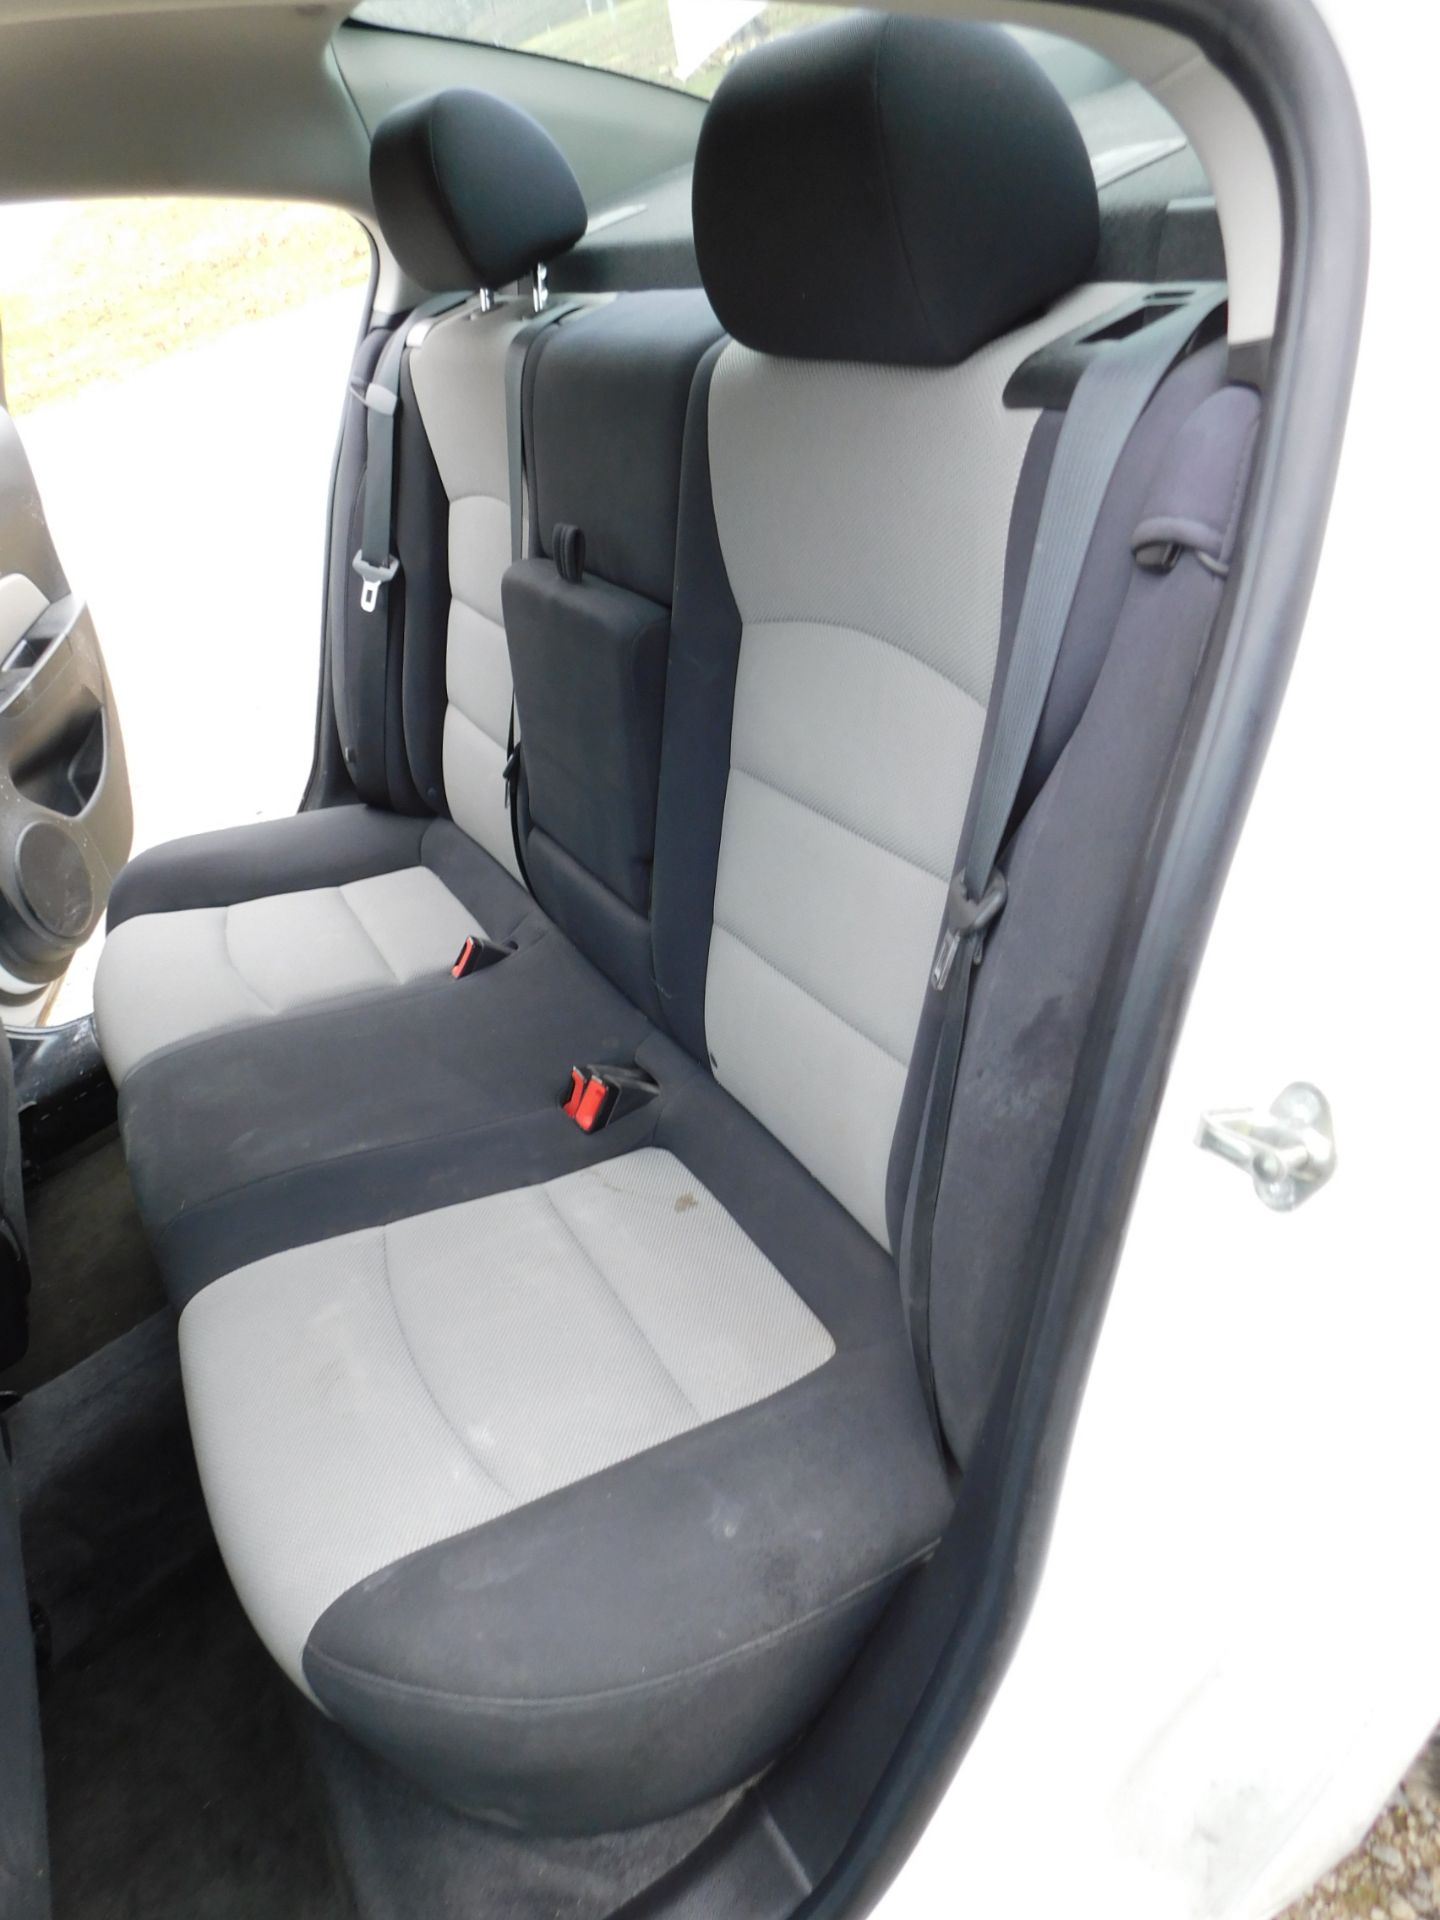 2014 Chevrolet Cruze 4-Door Sedan, VIN 1G1PA5SH1E7315697, AM/FM, AC, Cruise Control, PW, PL, 111,323 - Image 16 of 41